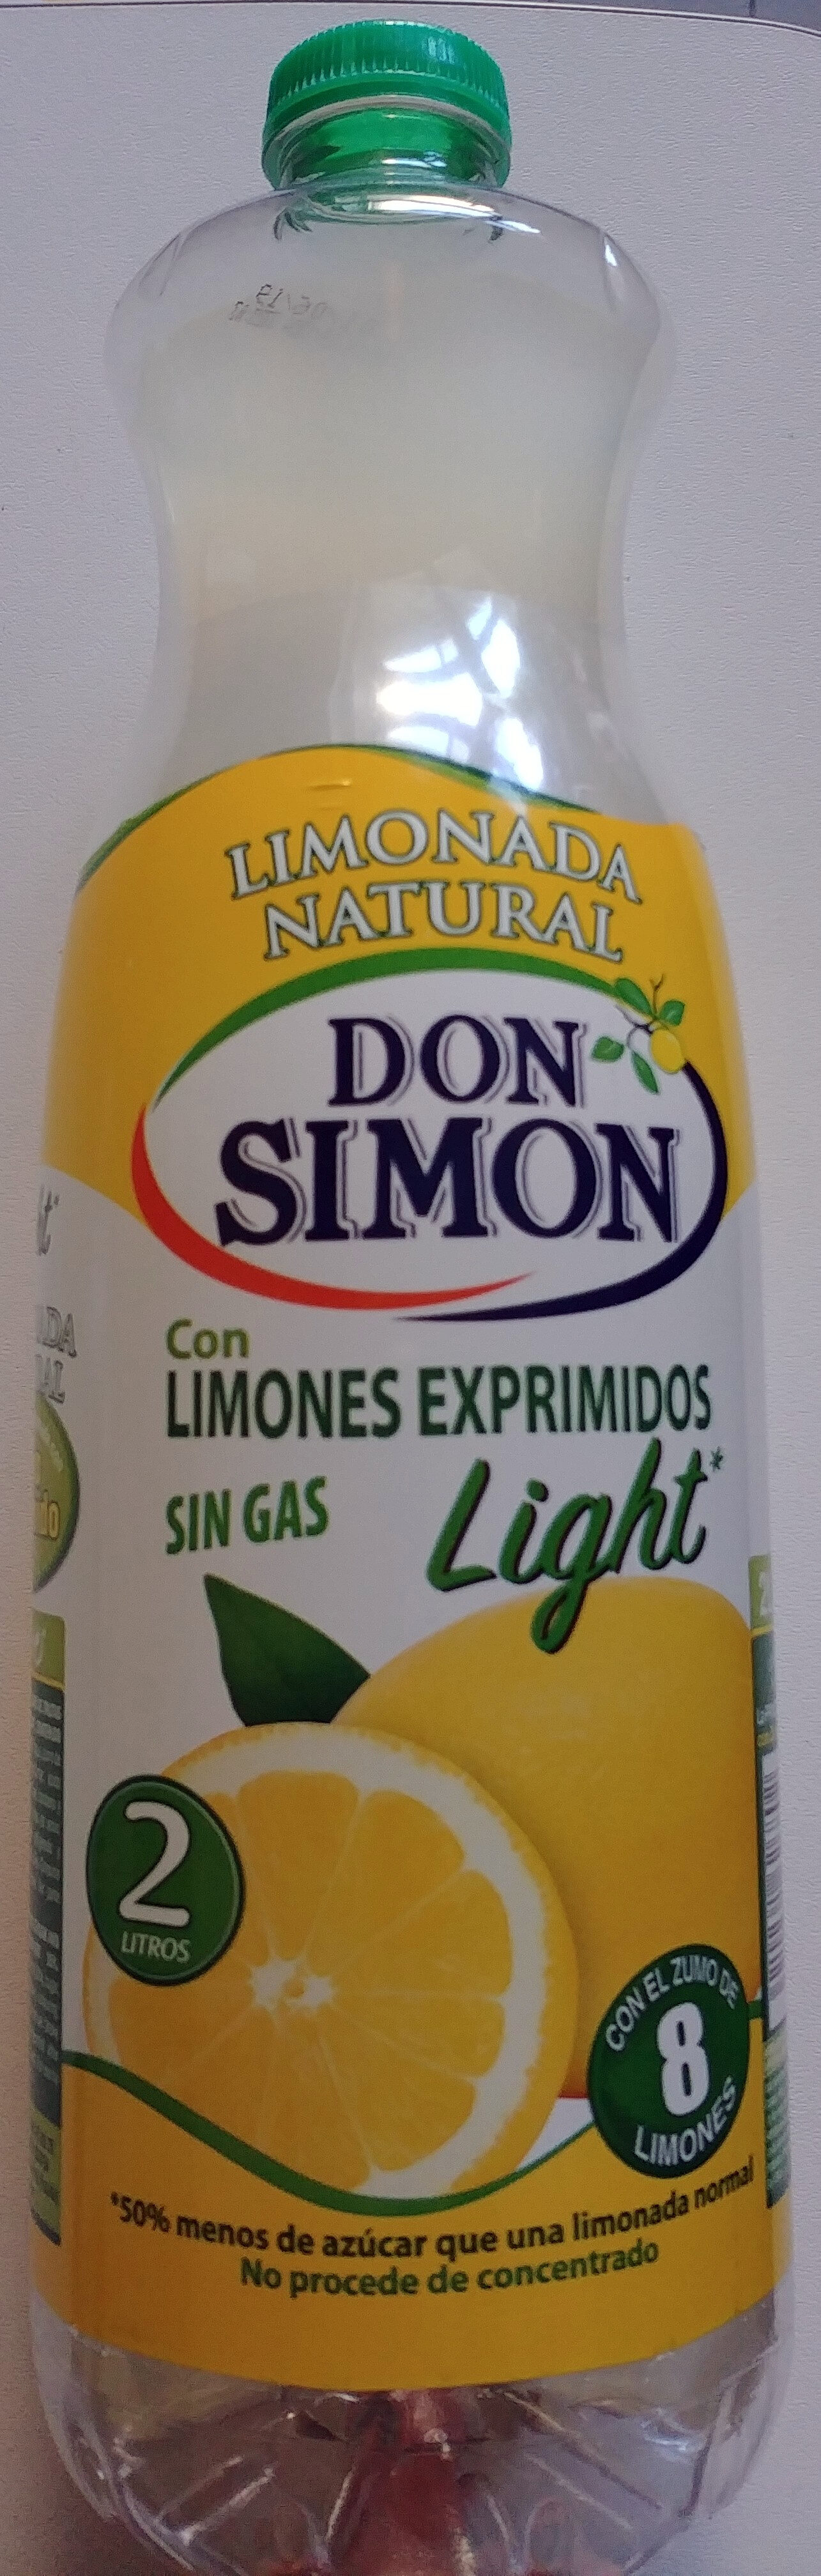 Limonada natural light - Product - es